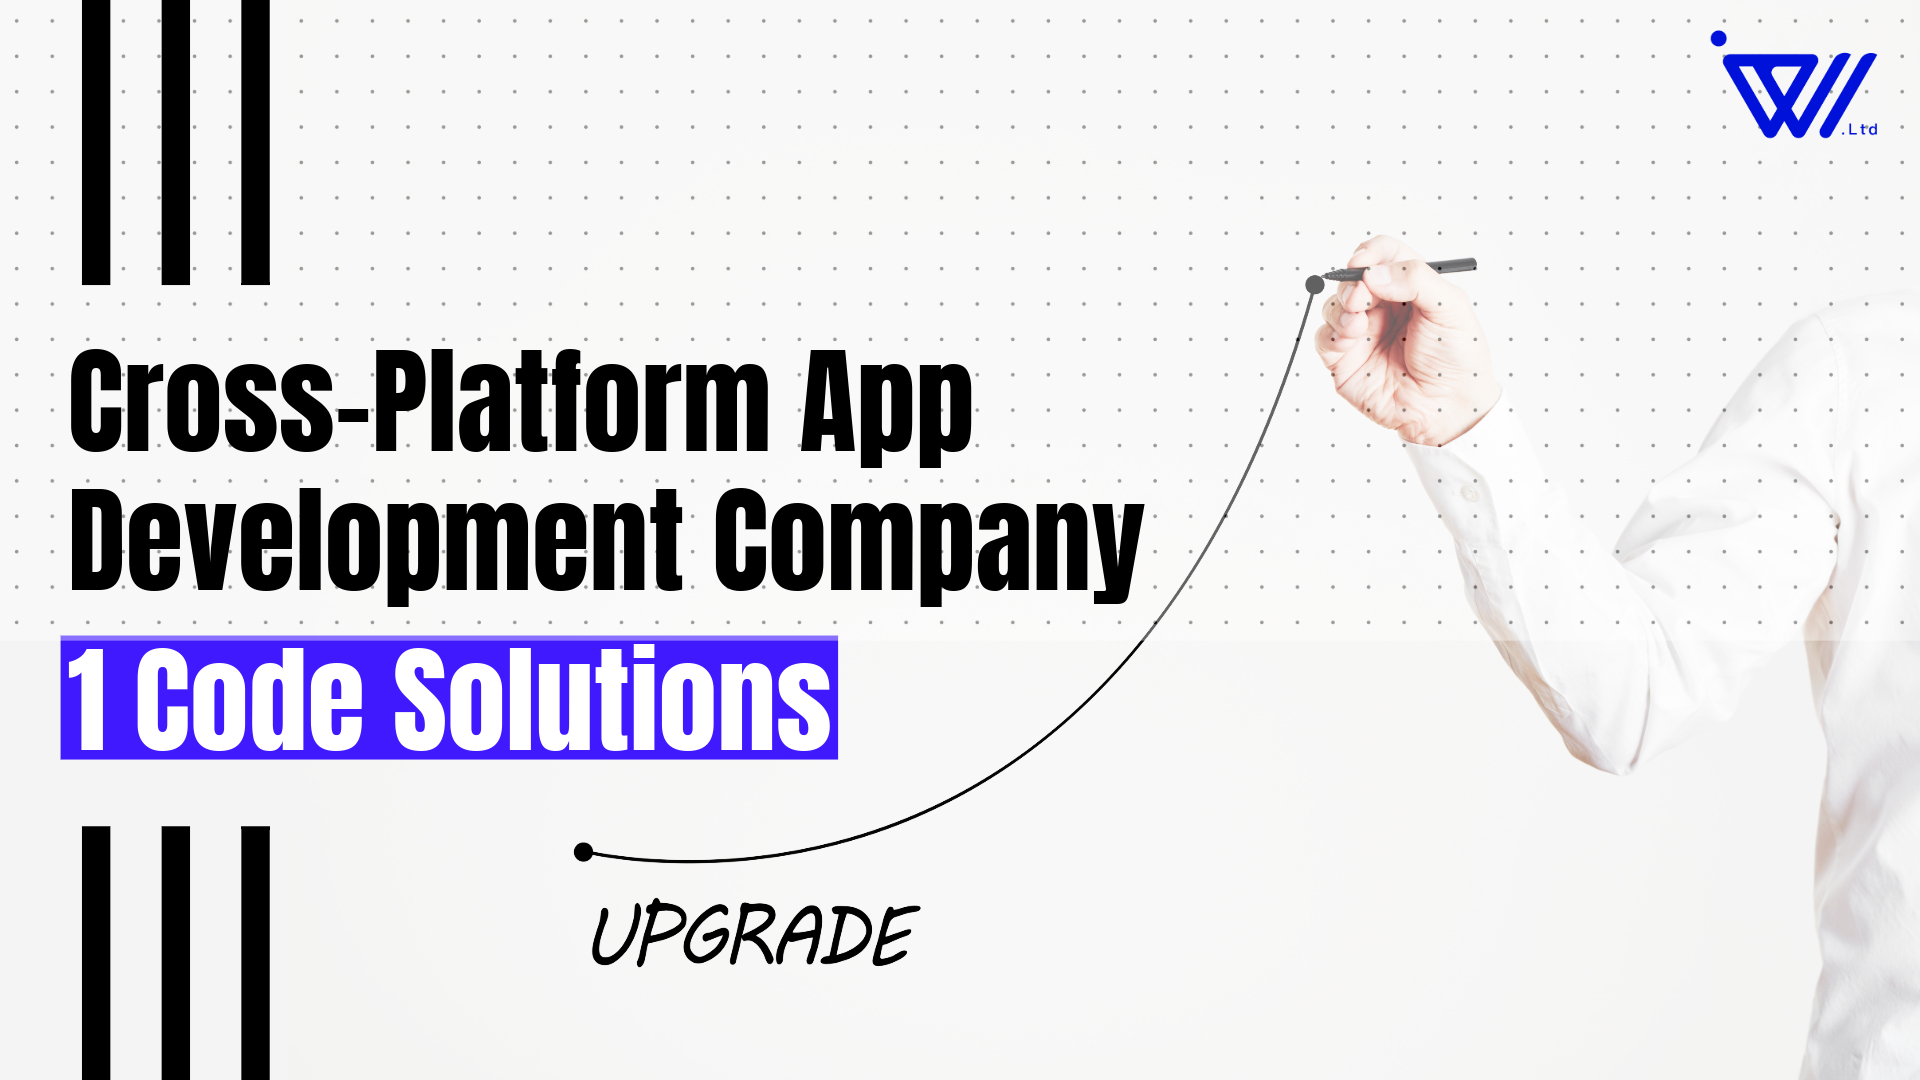 Cross-Platform App Development Company: 1 Code Solutions